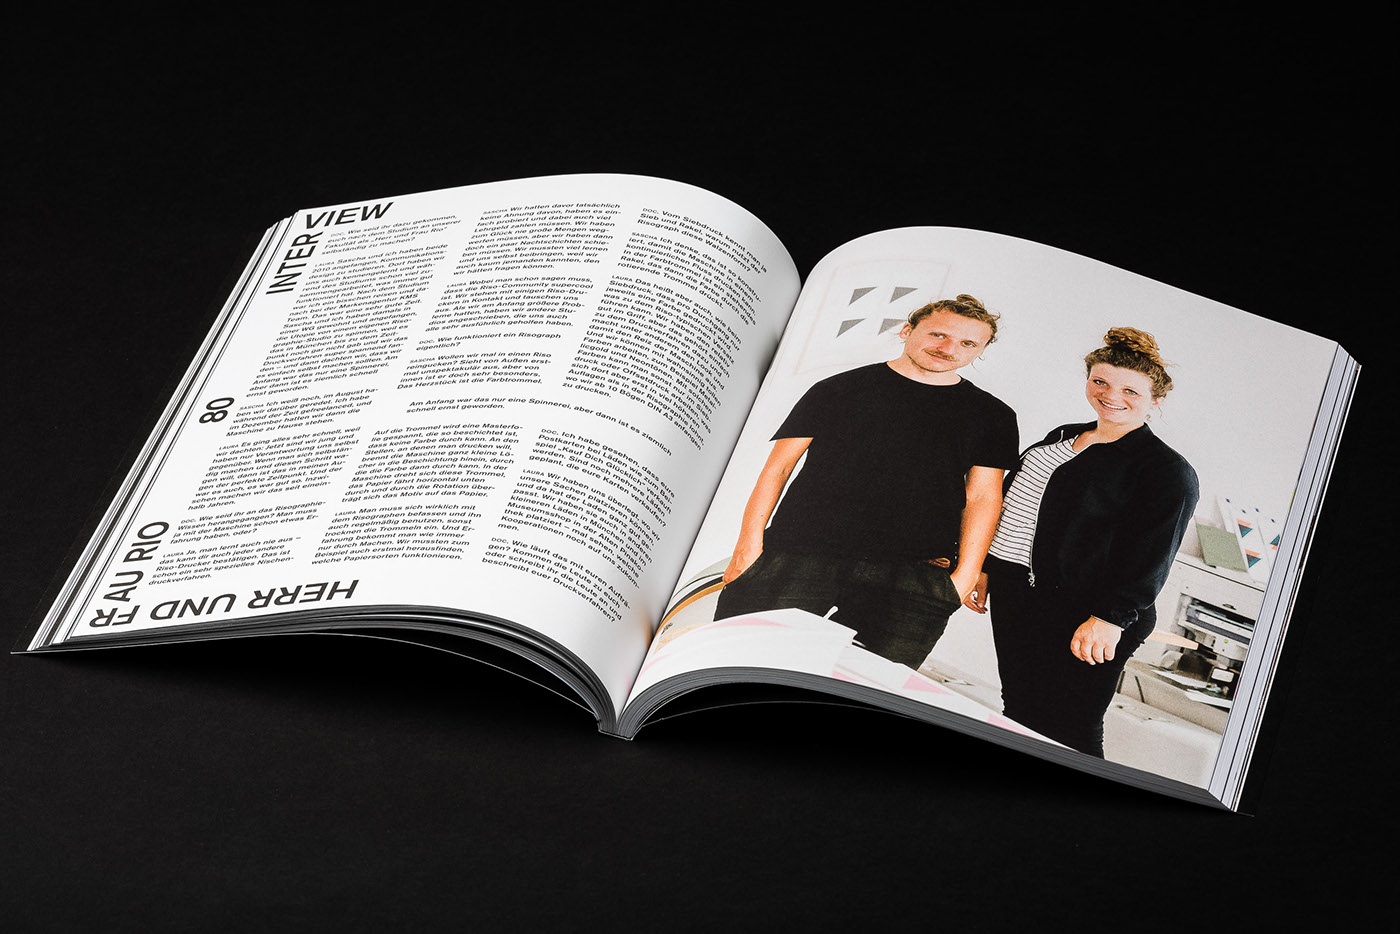 DOC. magazin n14 Schnittmengen intersections editorial magazine hochschule design fakultät